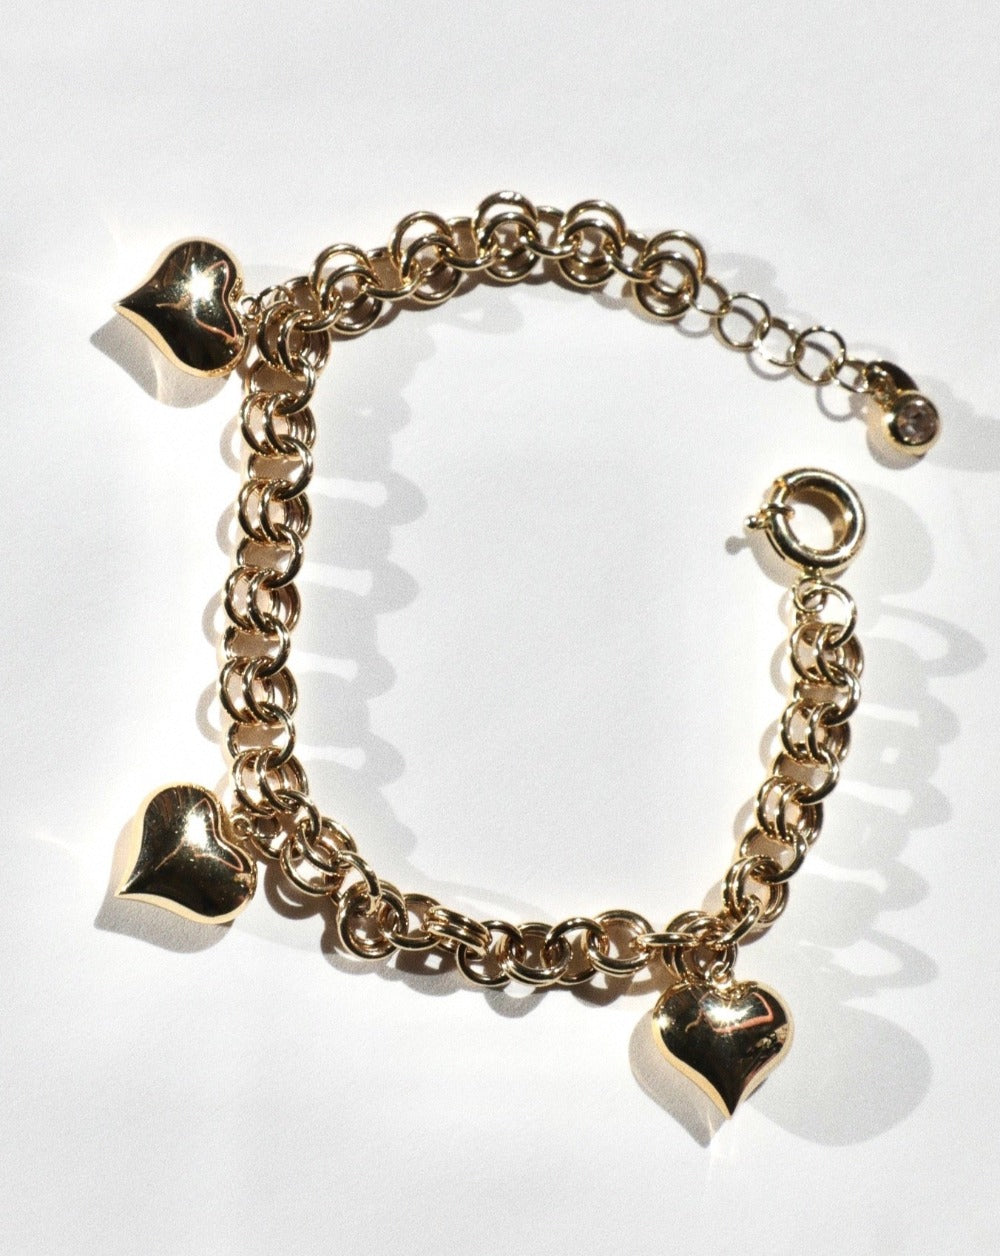 14 karat gold bracelet with heart charms handmade from 14 karat gold